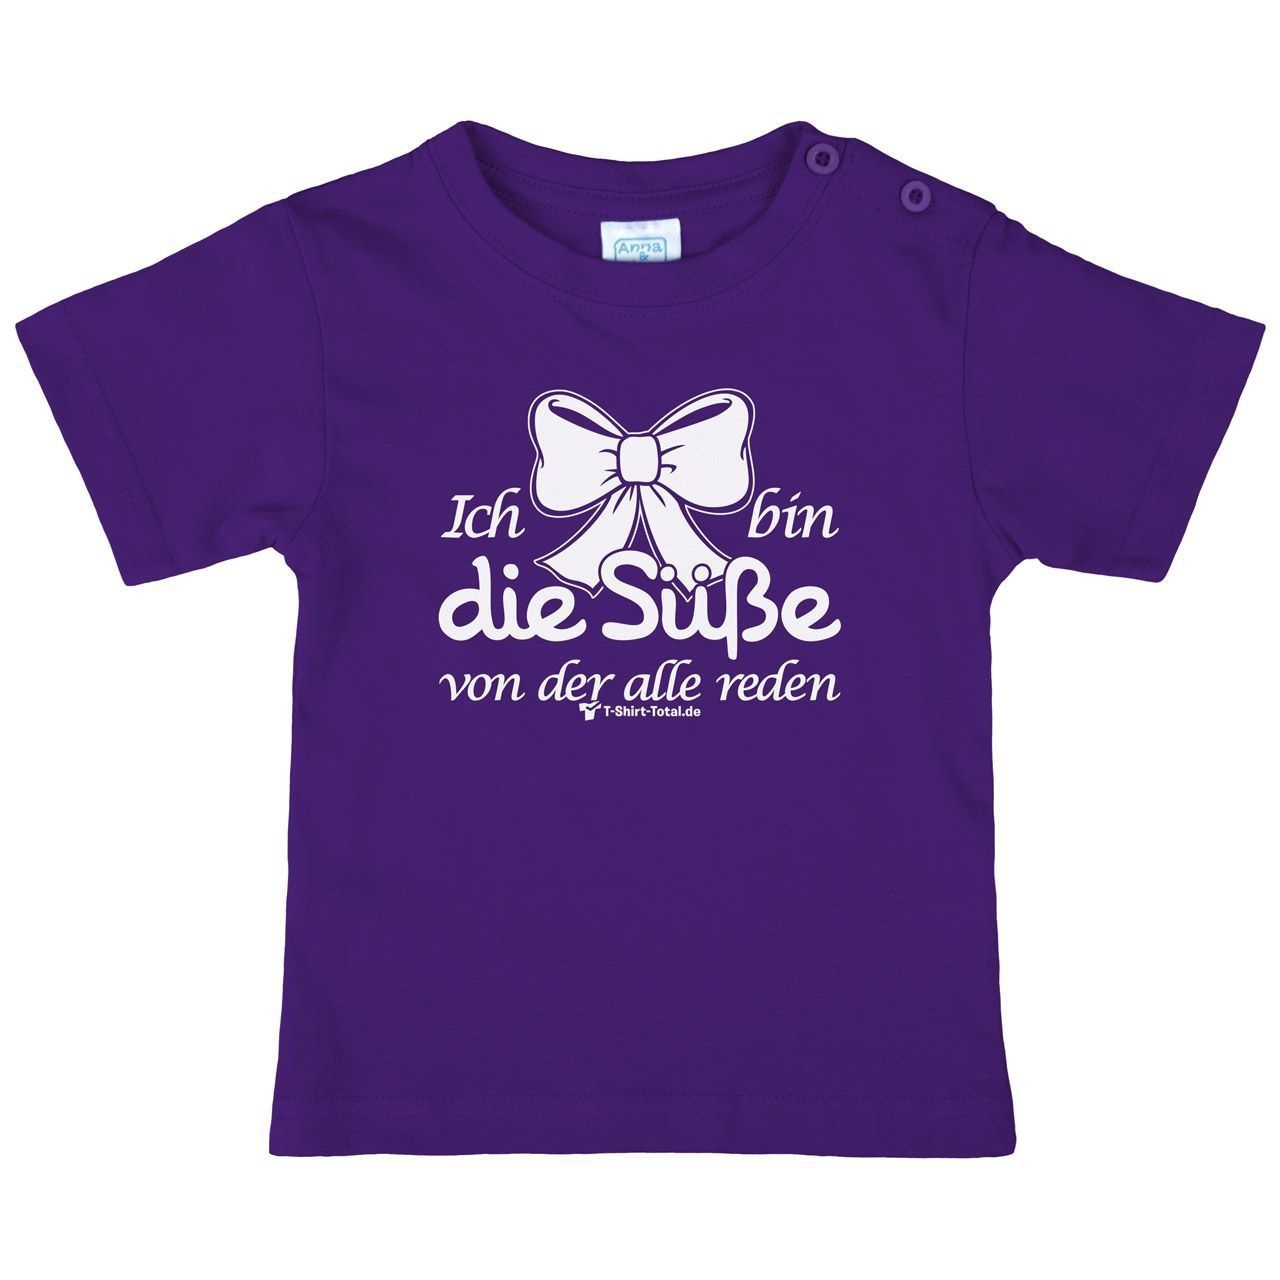 Die Süße Kinder T-Shirt lila 80 / 86